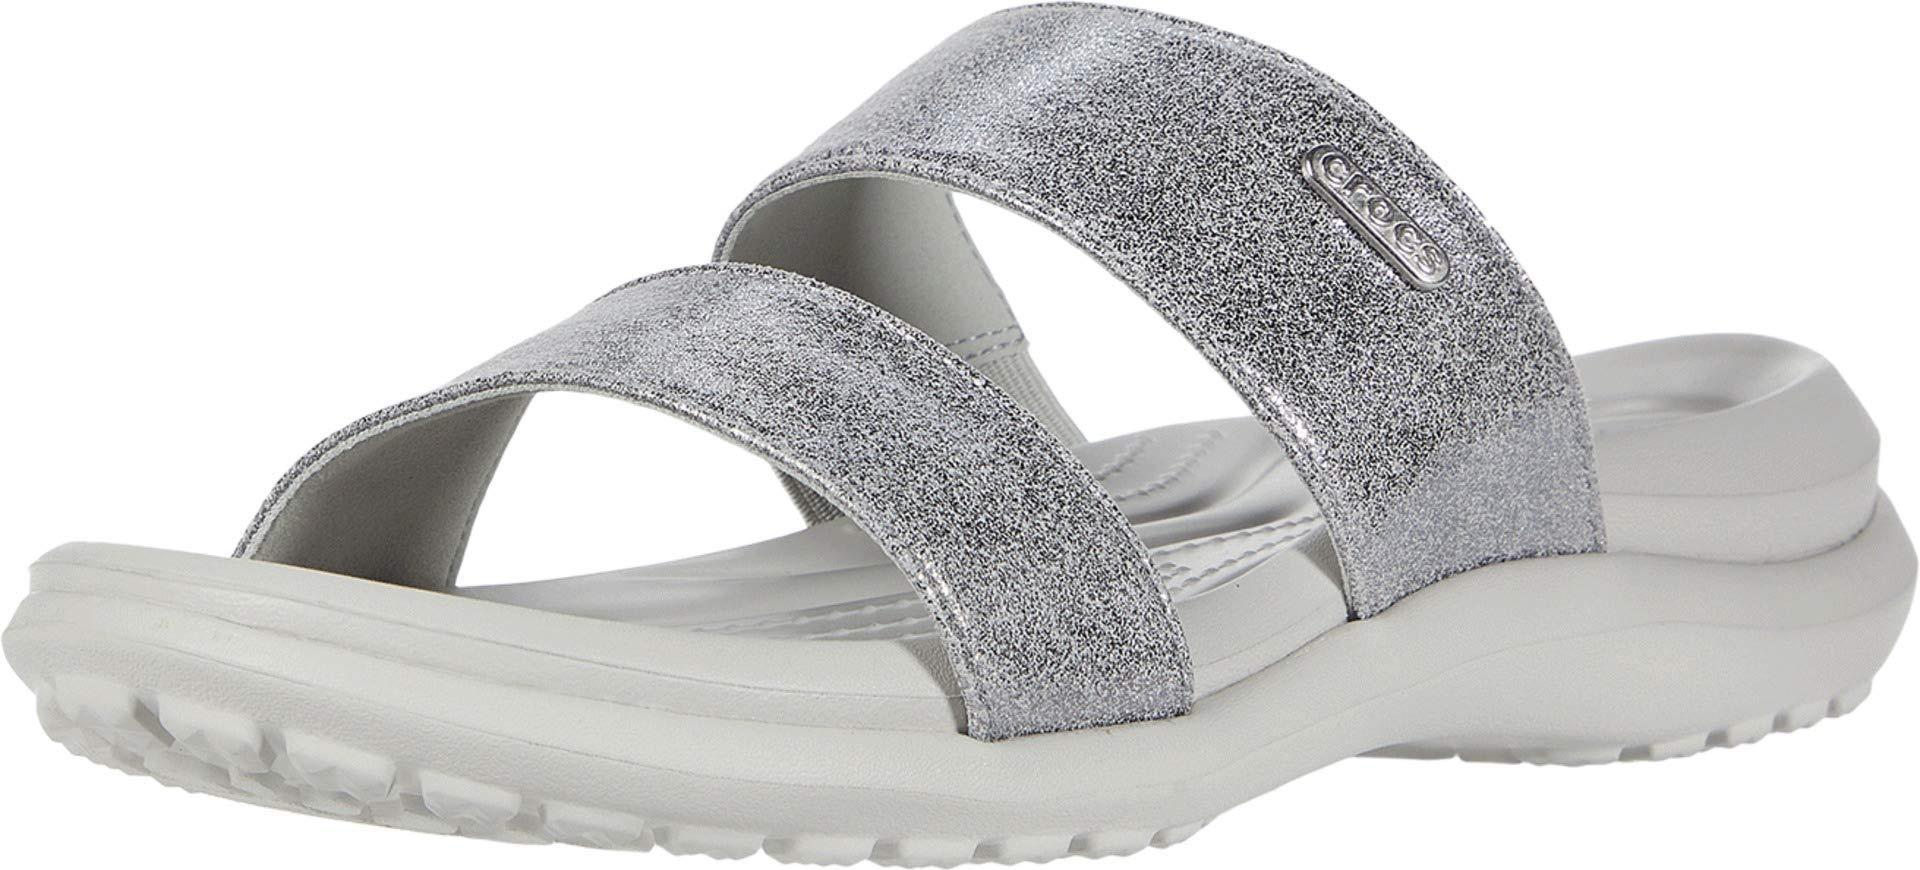 Crocs™ Capri Dual Strap Slide Sandals Water Shoe in Pearl White (White) -  Save 22% | Lyst